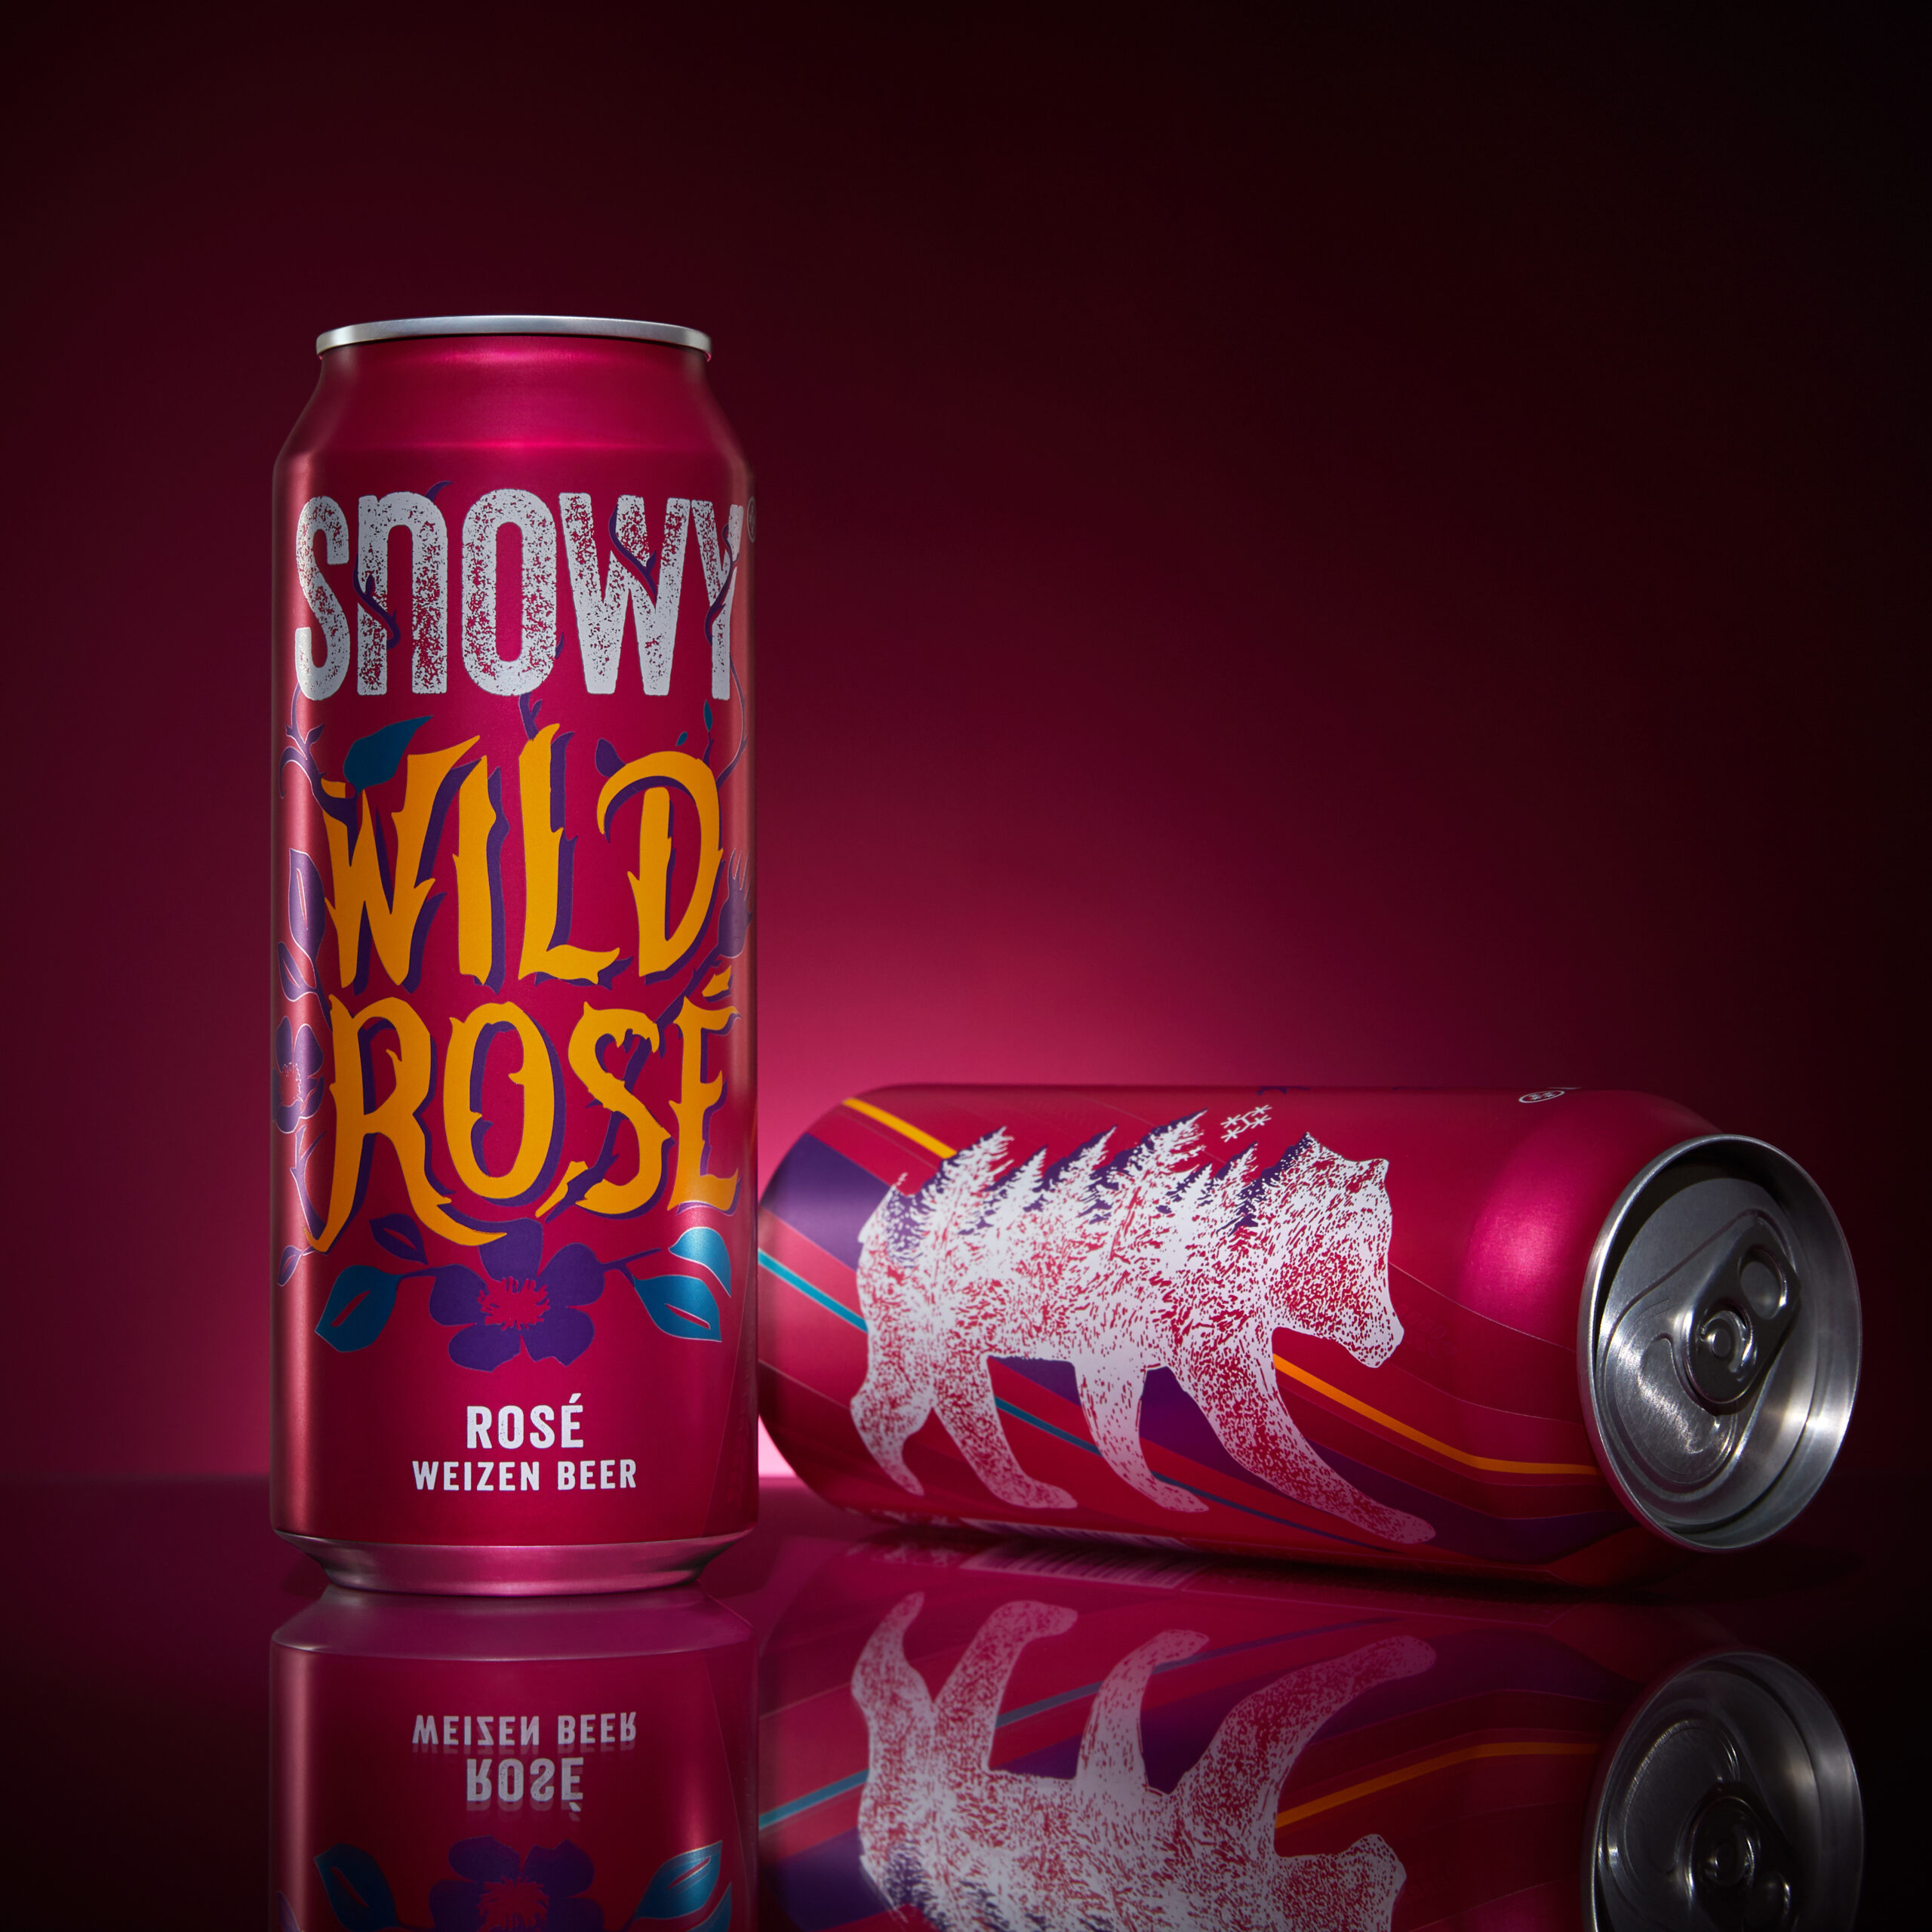 Snowy Wild Rose’